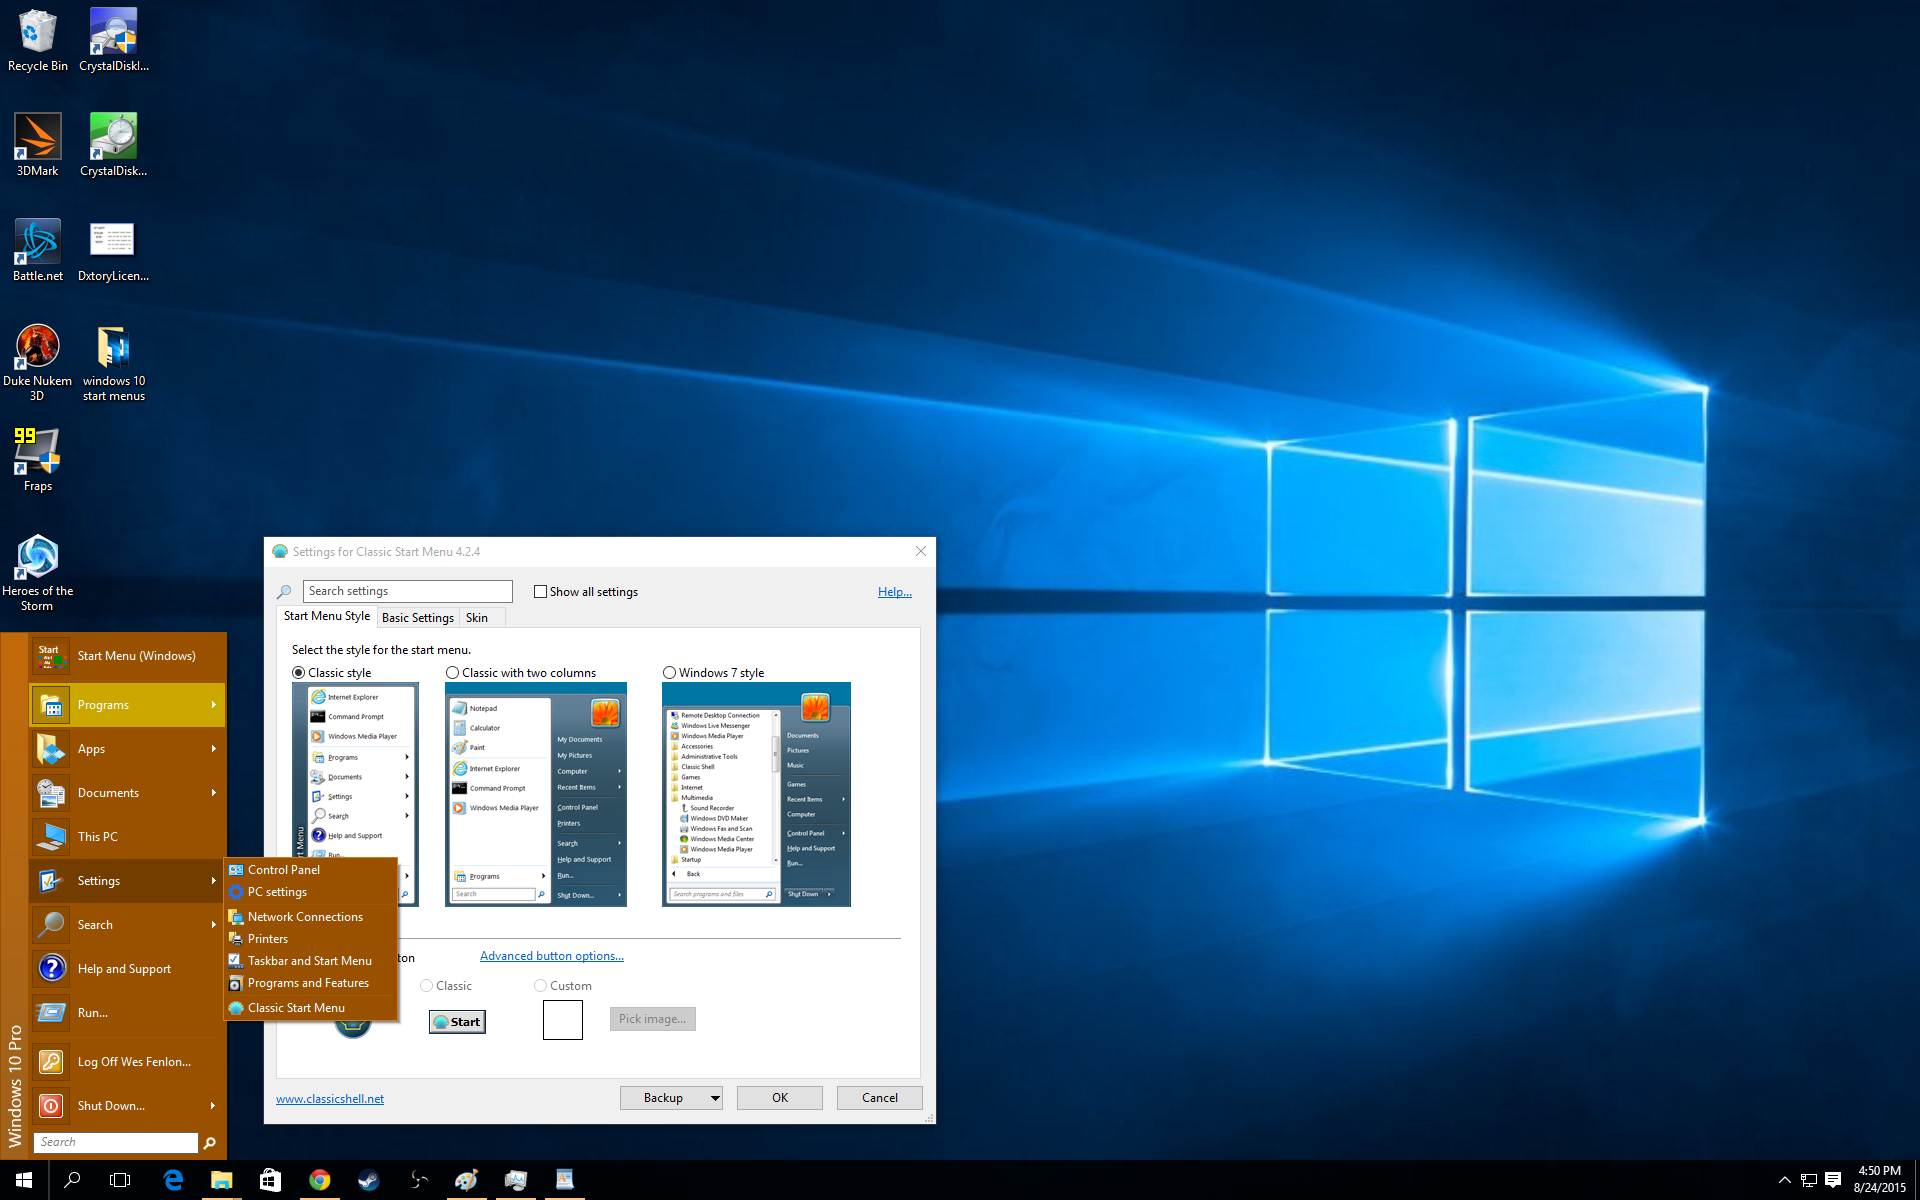 Tips for customizing Windows 10s Start menu